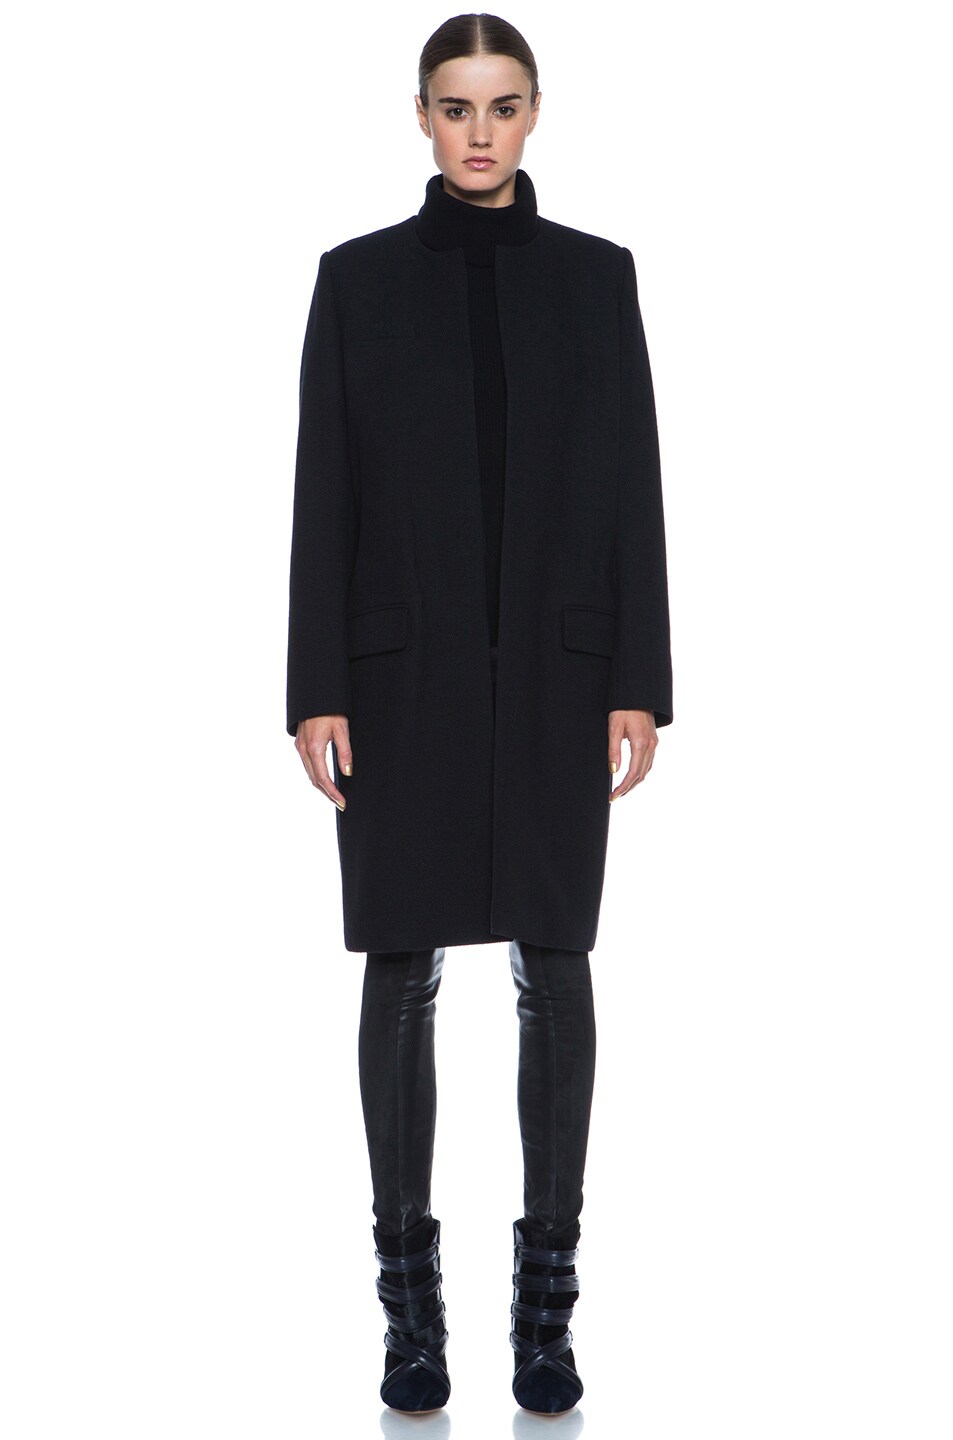 Isabel Marant Easy Manteaux Chic Wool-Blend Coat in Black | FWRD